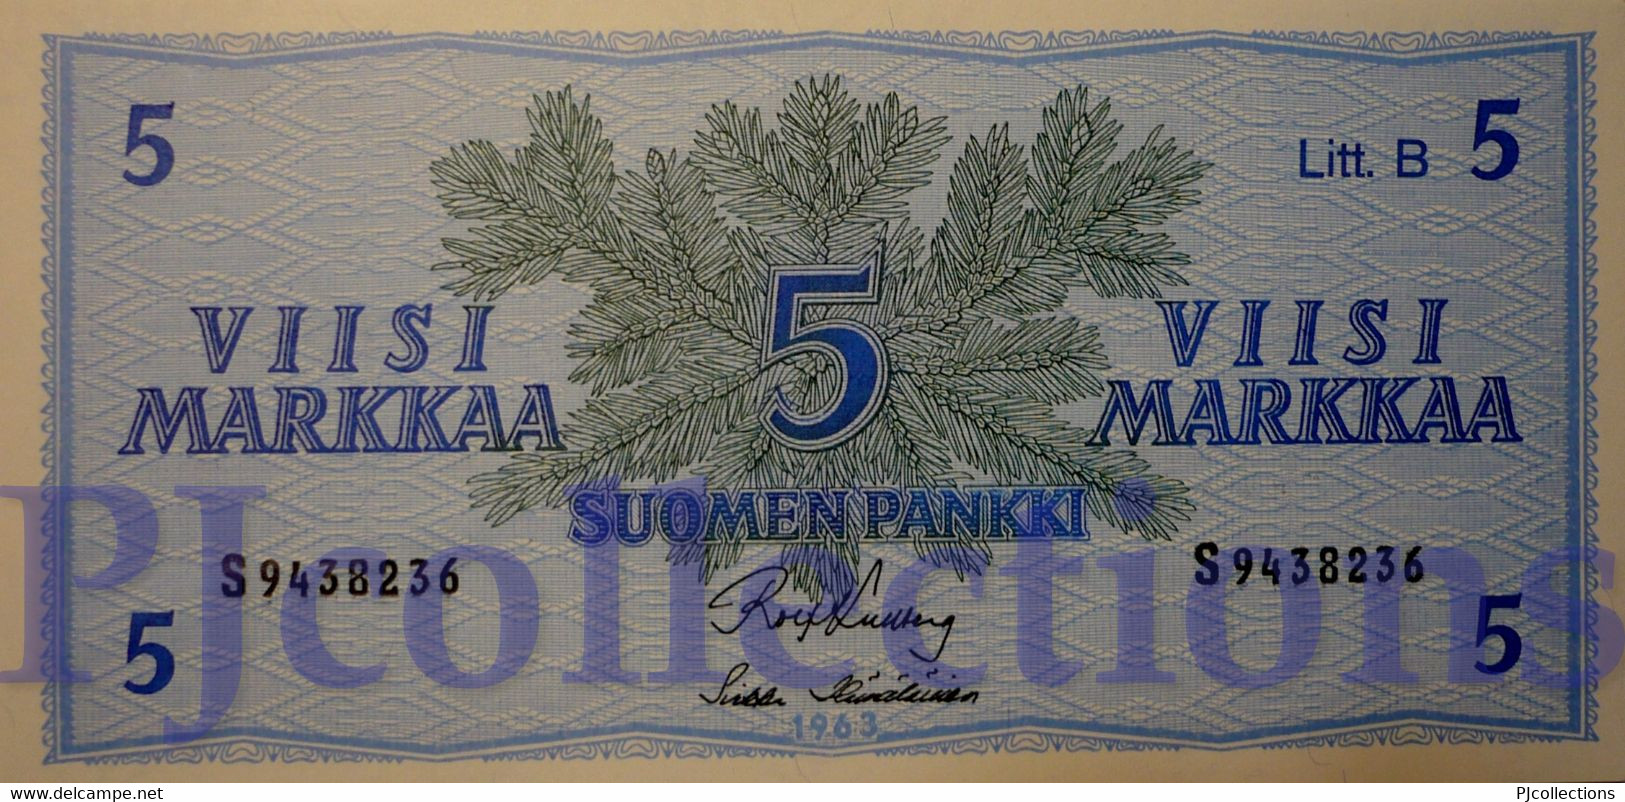 FINLAND 5 MARKKAA 1963 PICK 106A UNC - Finland